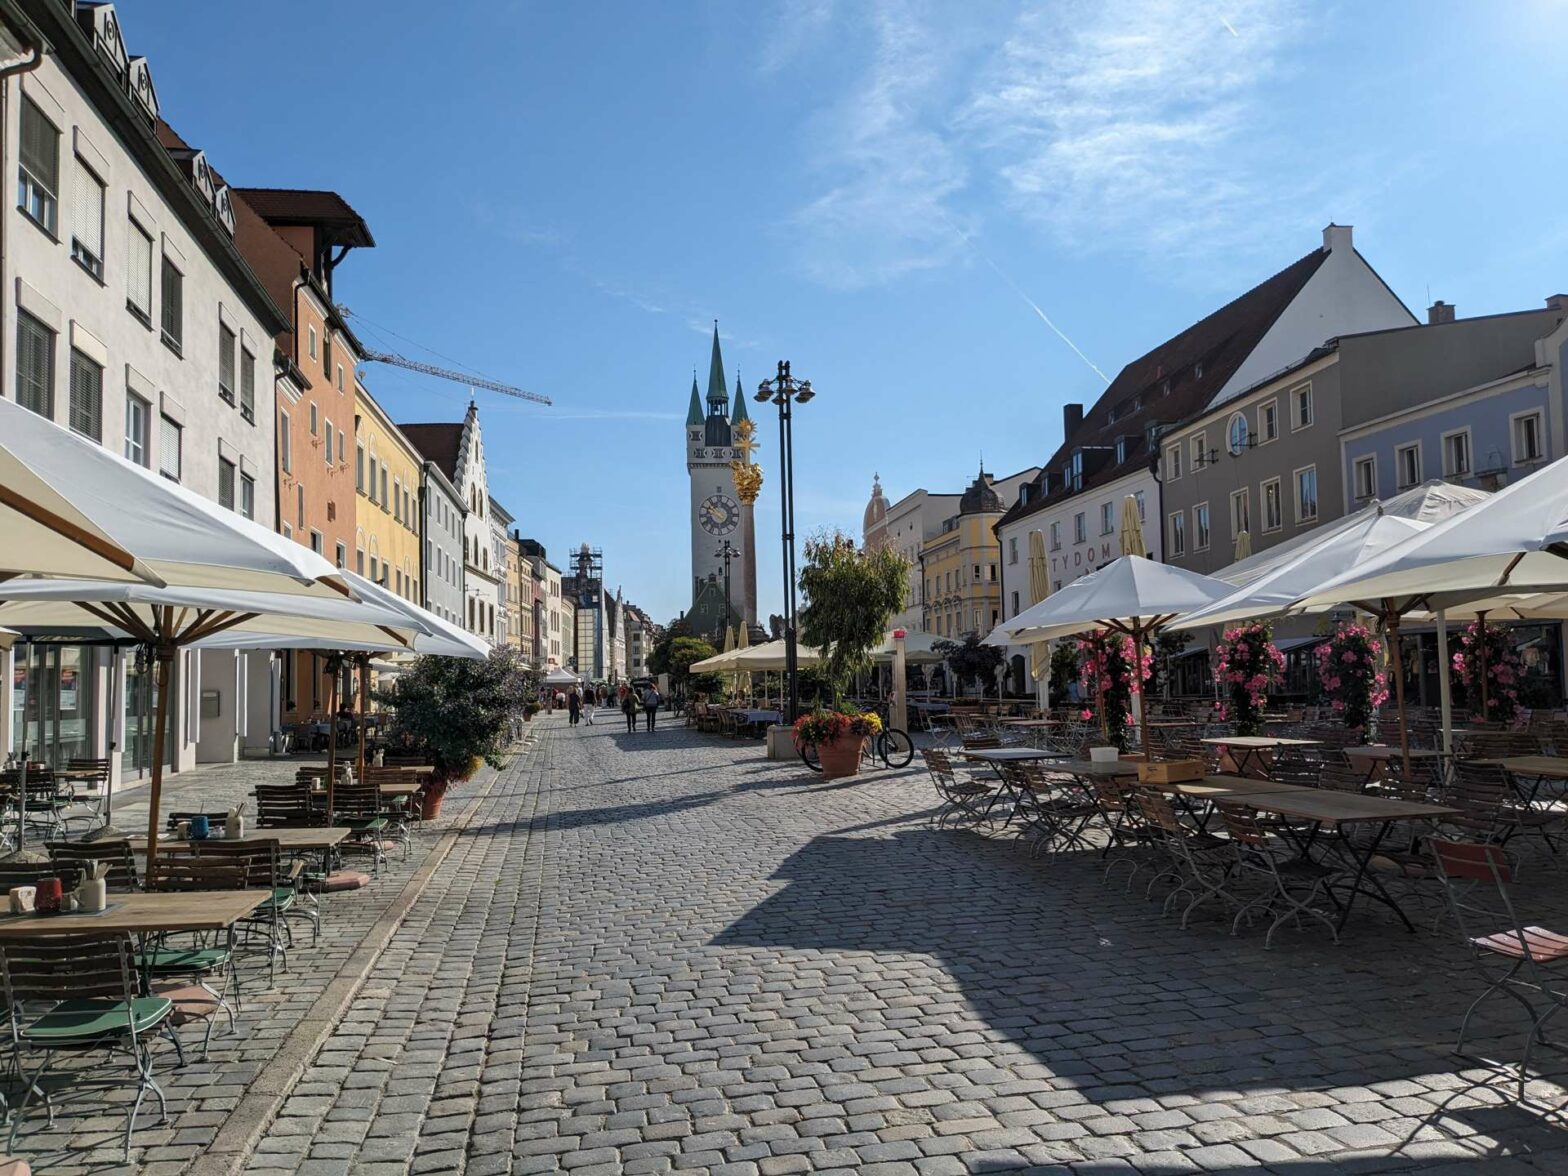 Market square in Straubing